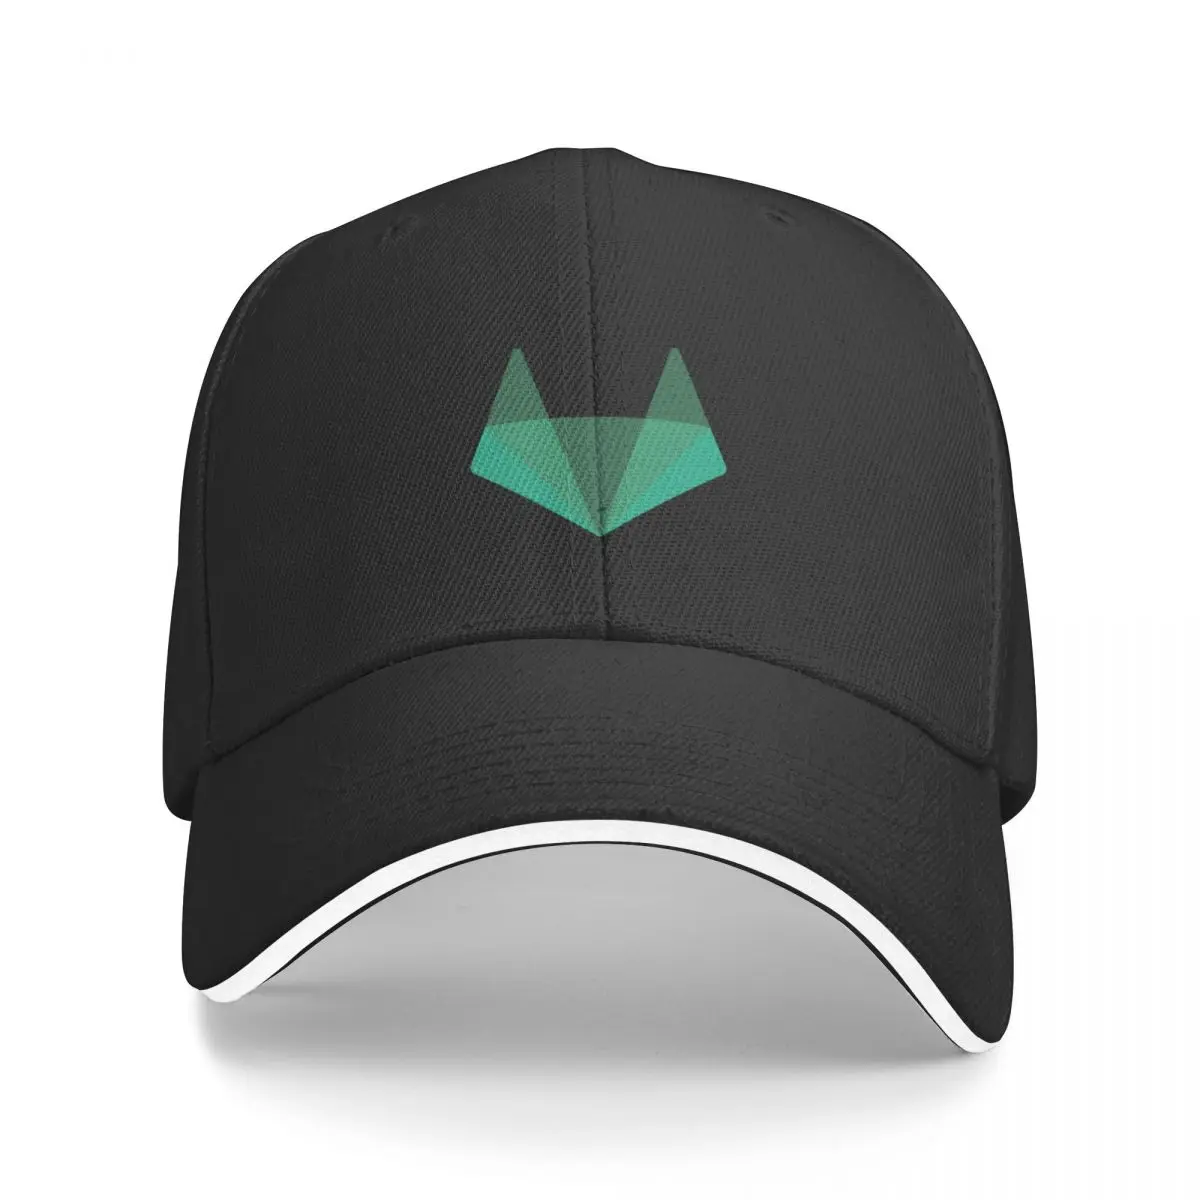 

Gitlab Baseball Cap Beach |-F-| derby hat Trucker Hats For Men Women's